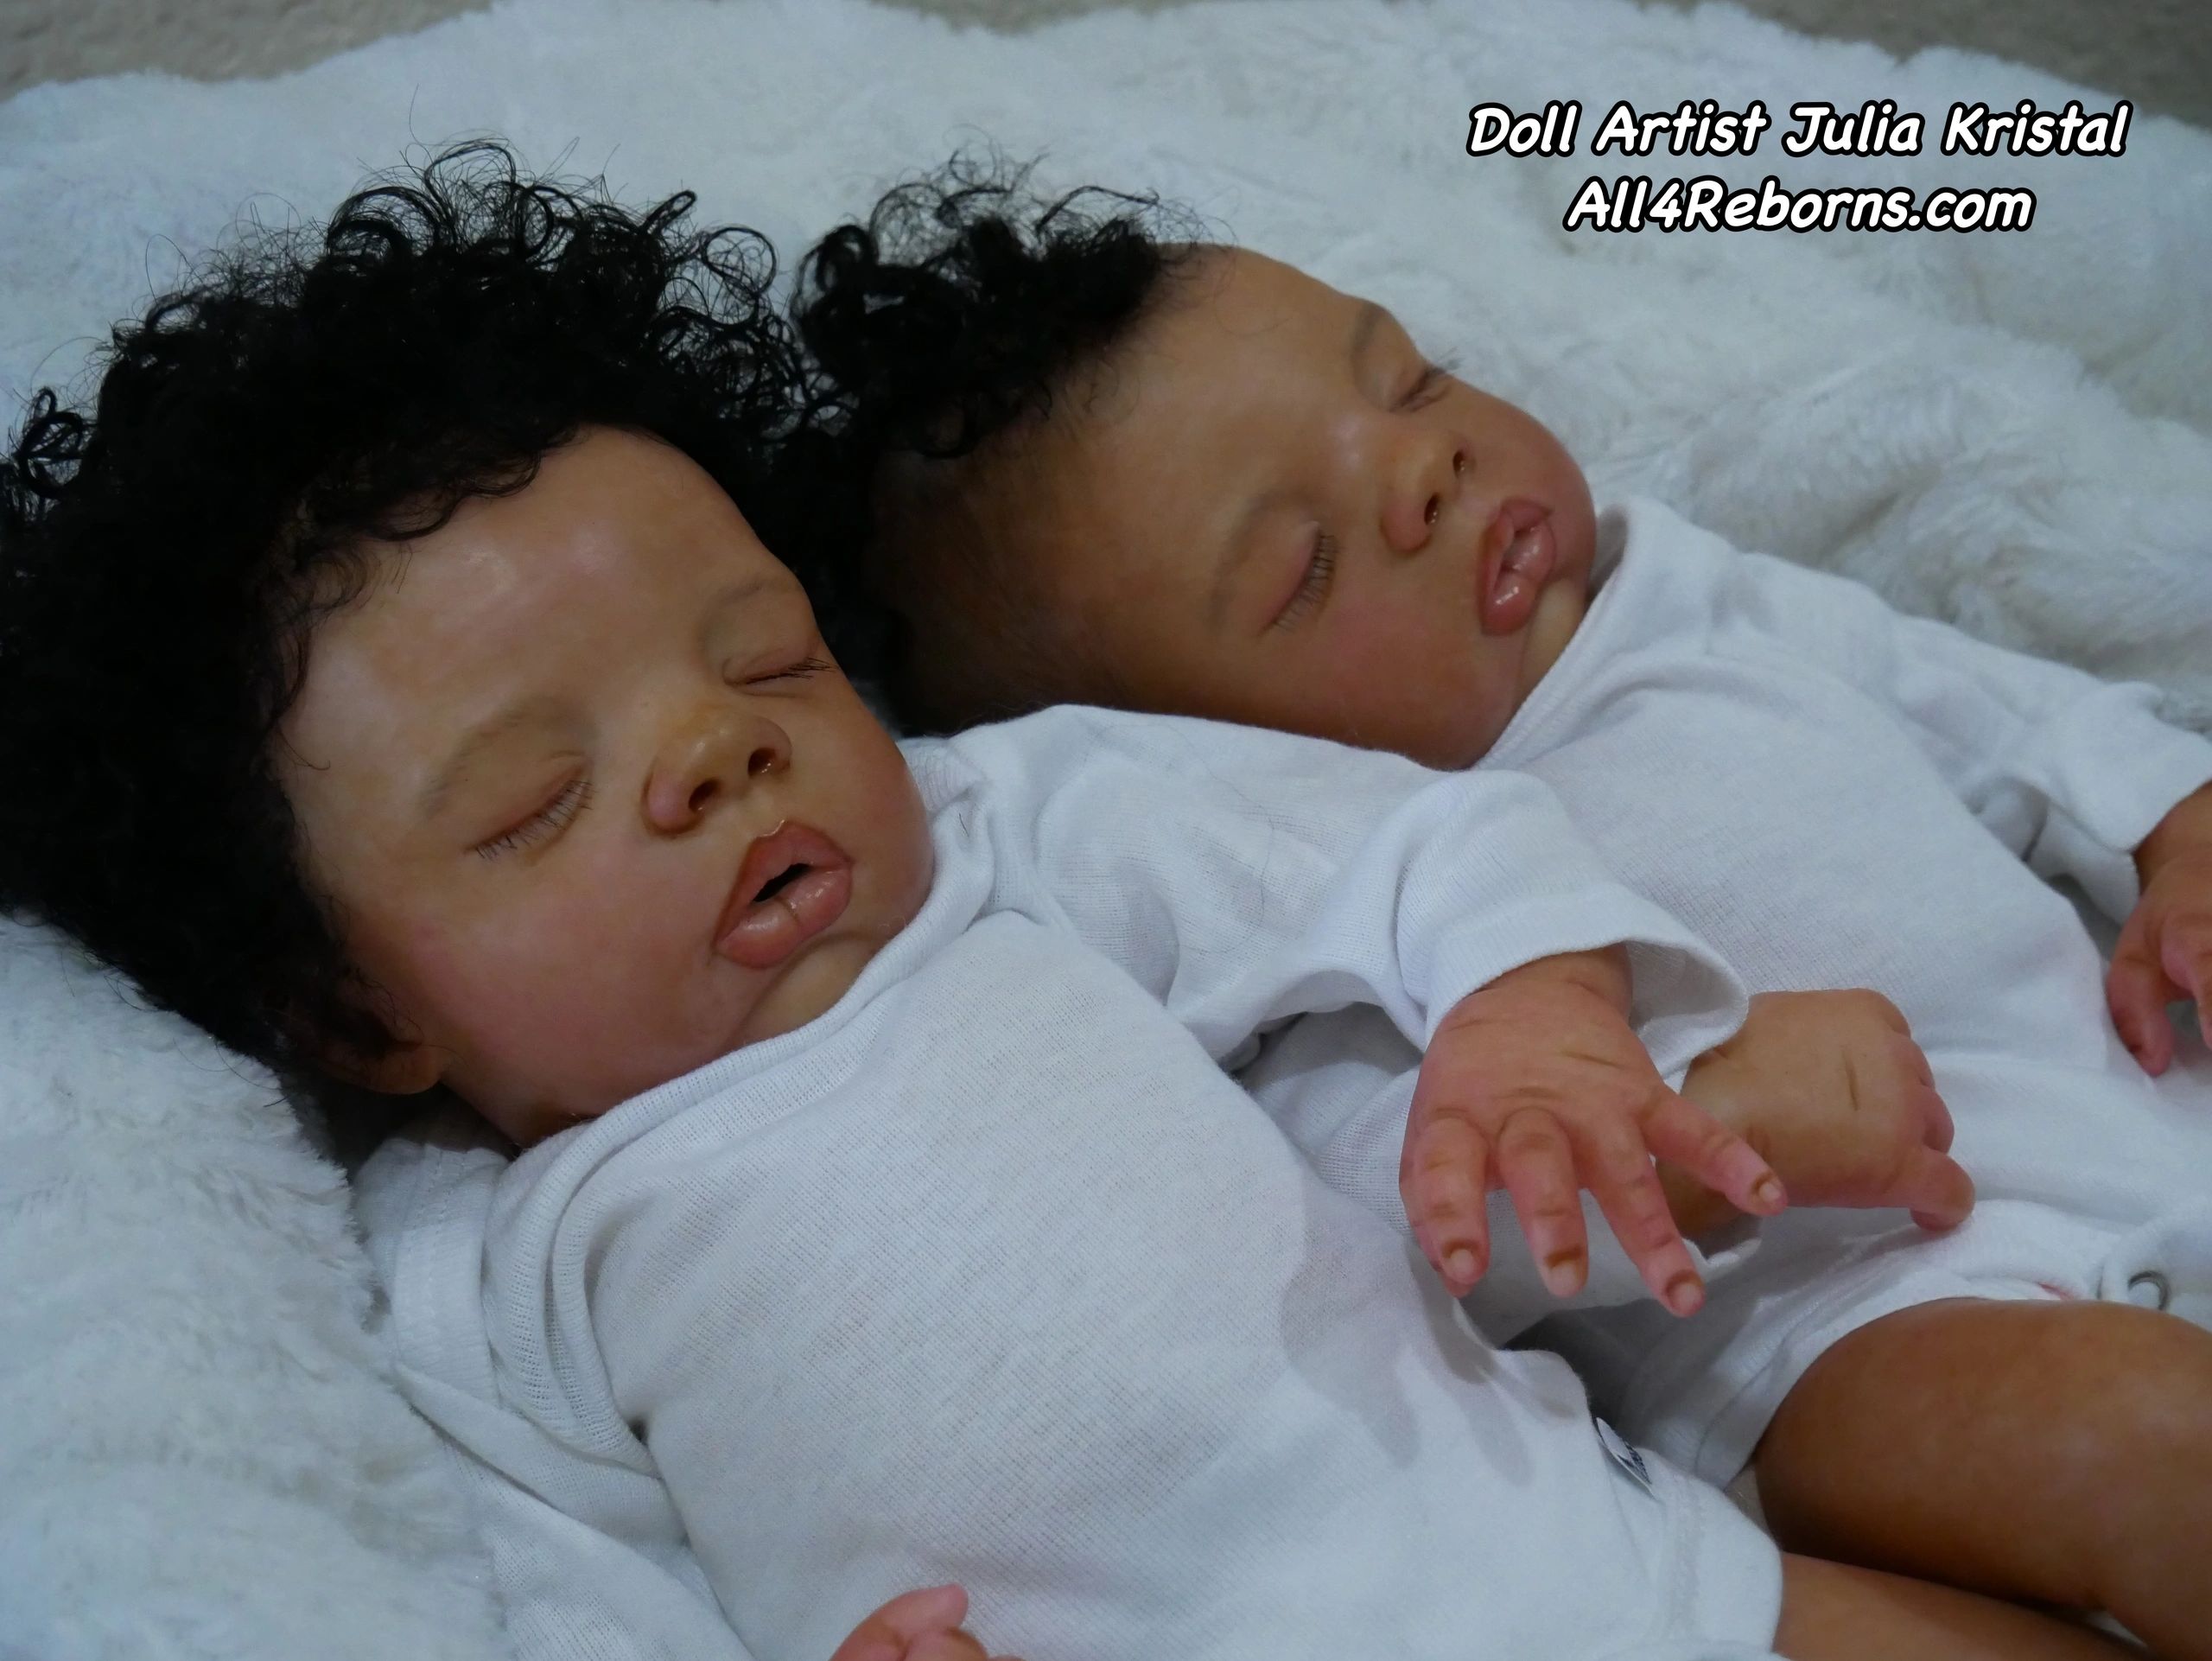 new reborn baby dolls